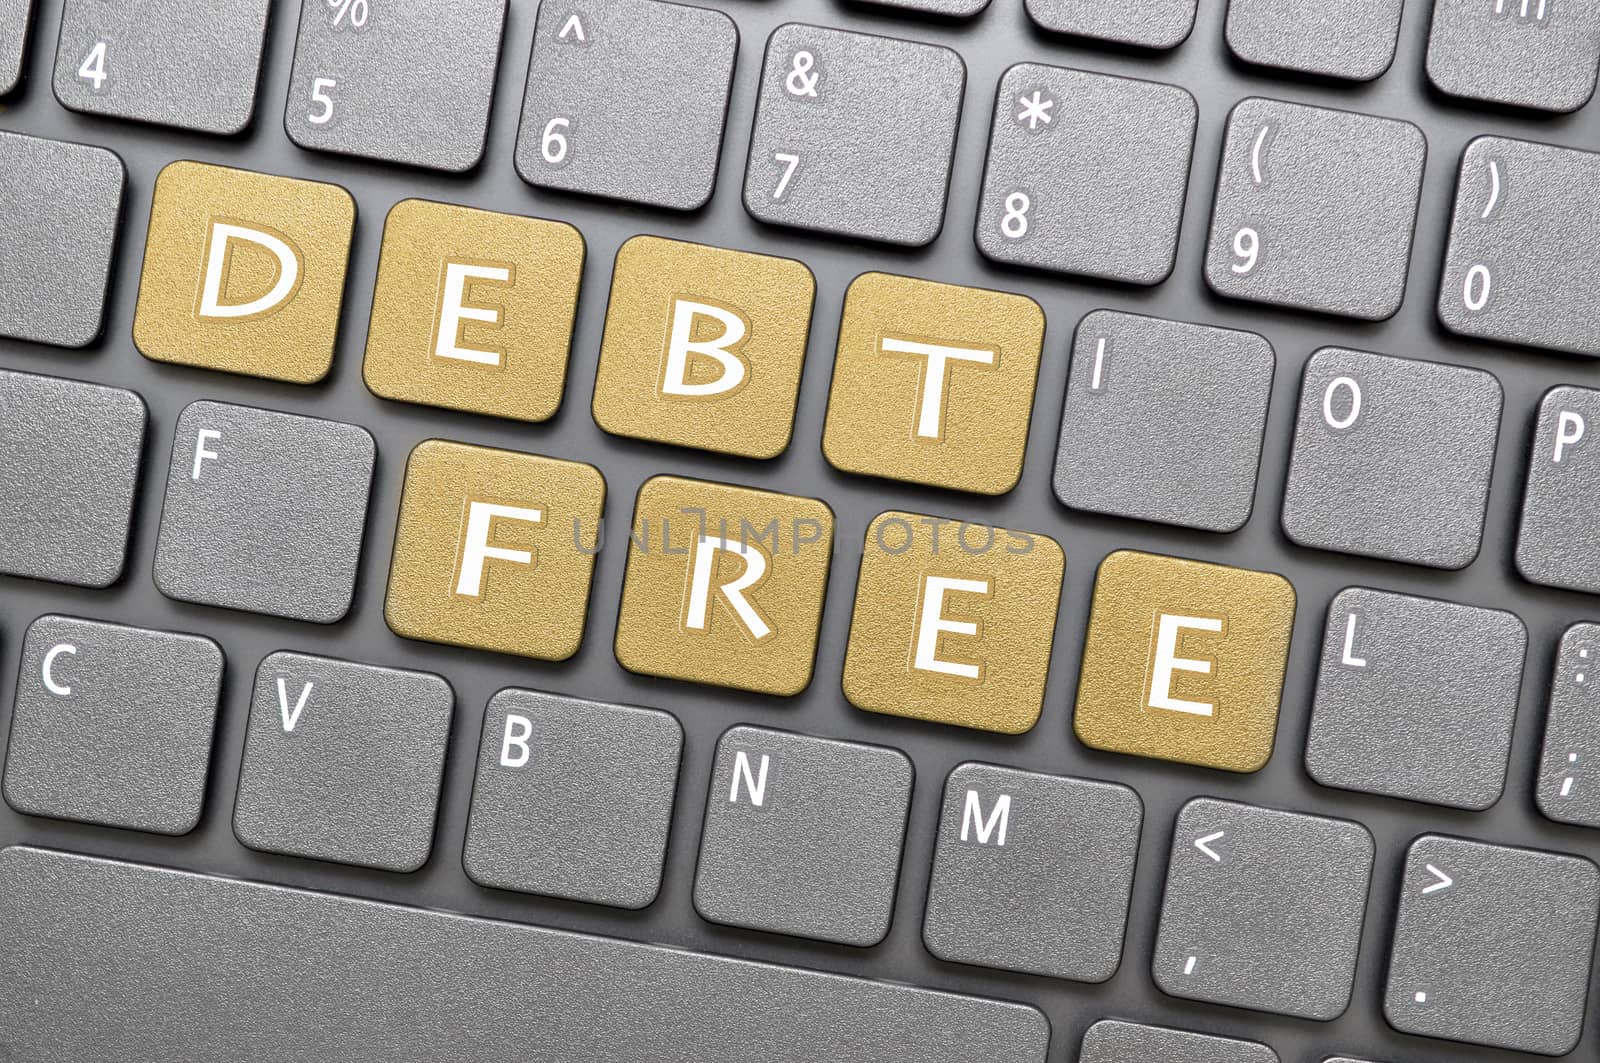 Debt free key on keyboard by payphoto